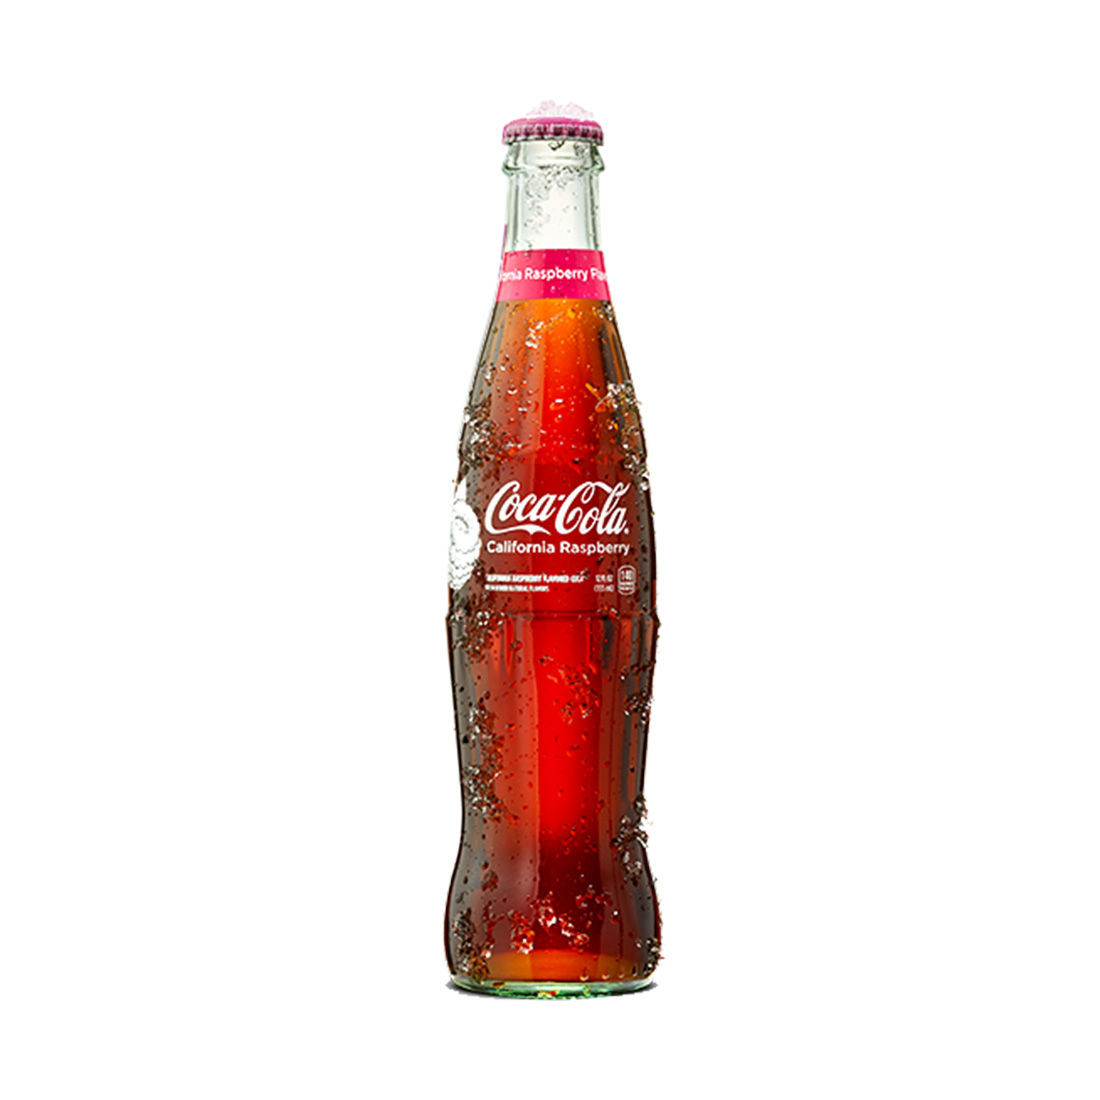 Coca-Cola California Raspberry bottle